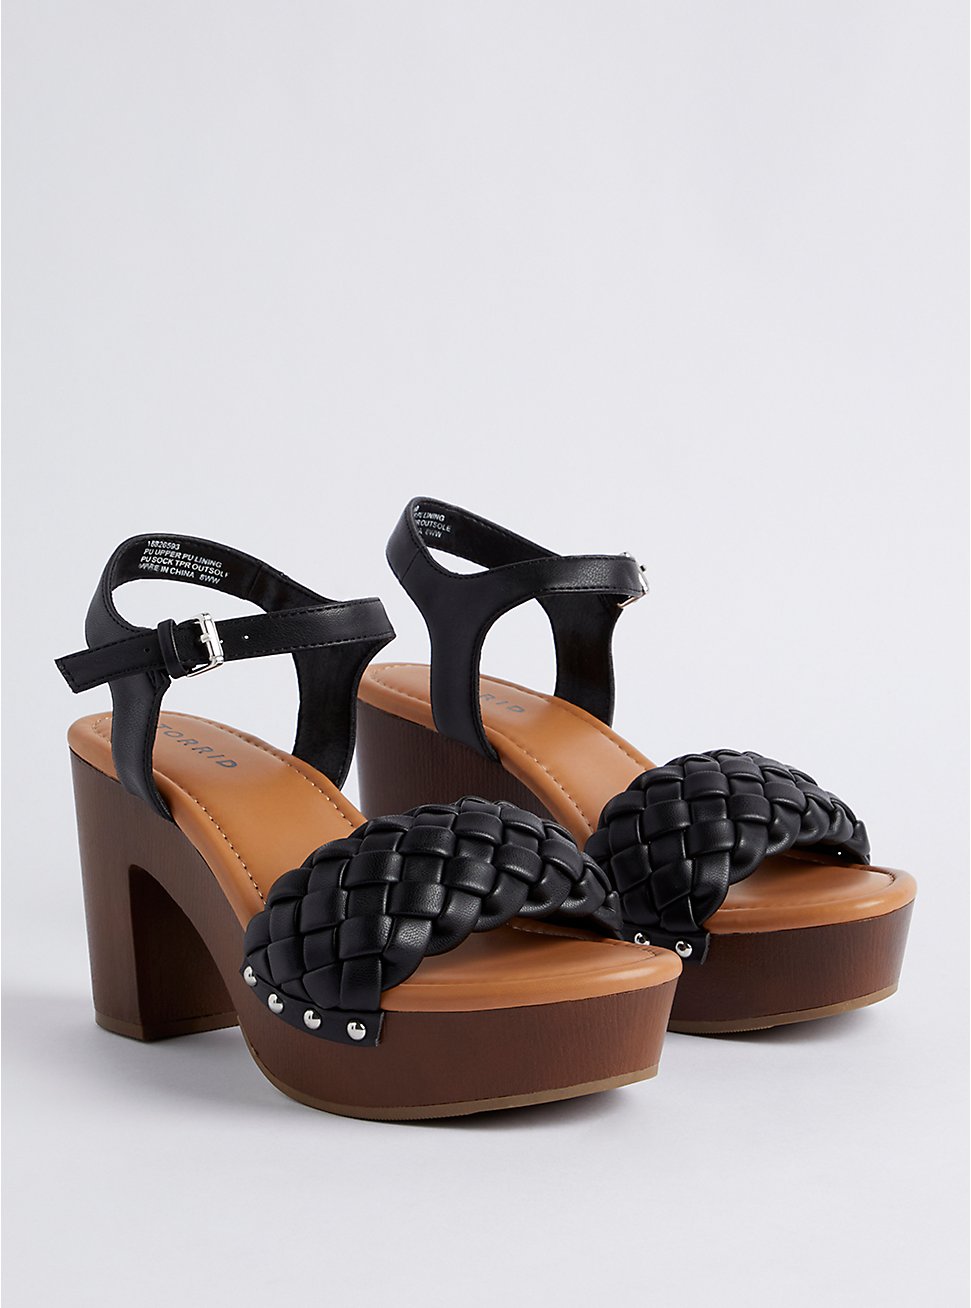 Plus Size Strappy Heel - Faux Leather Black (WW), BLACK, hi-res